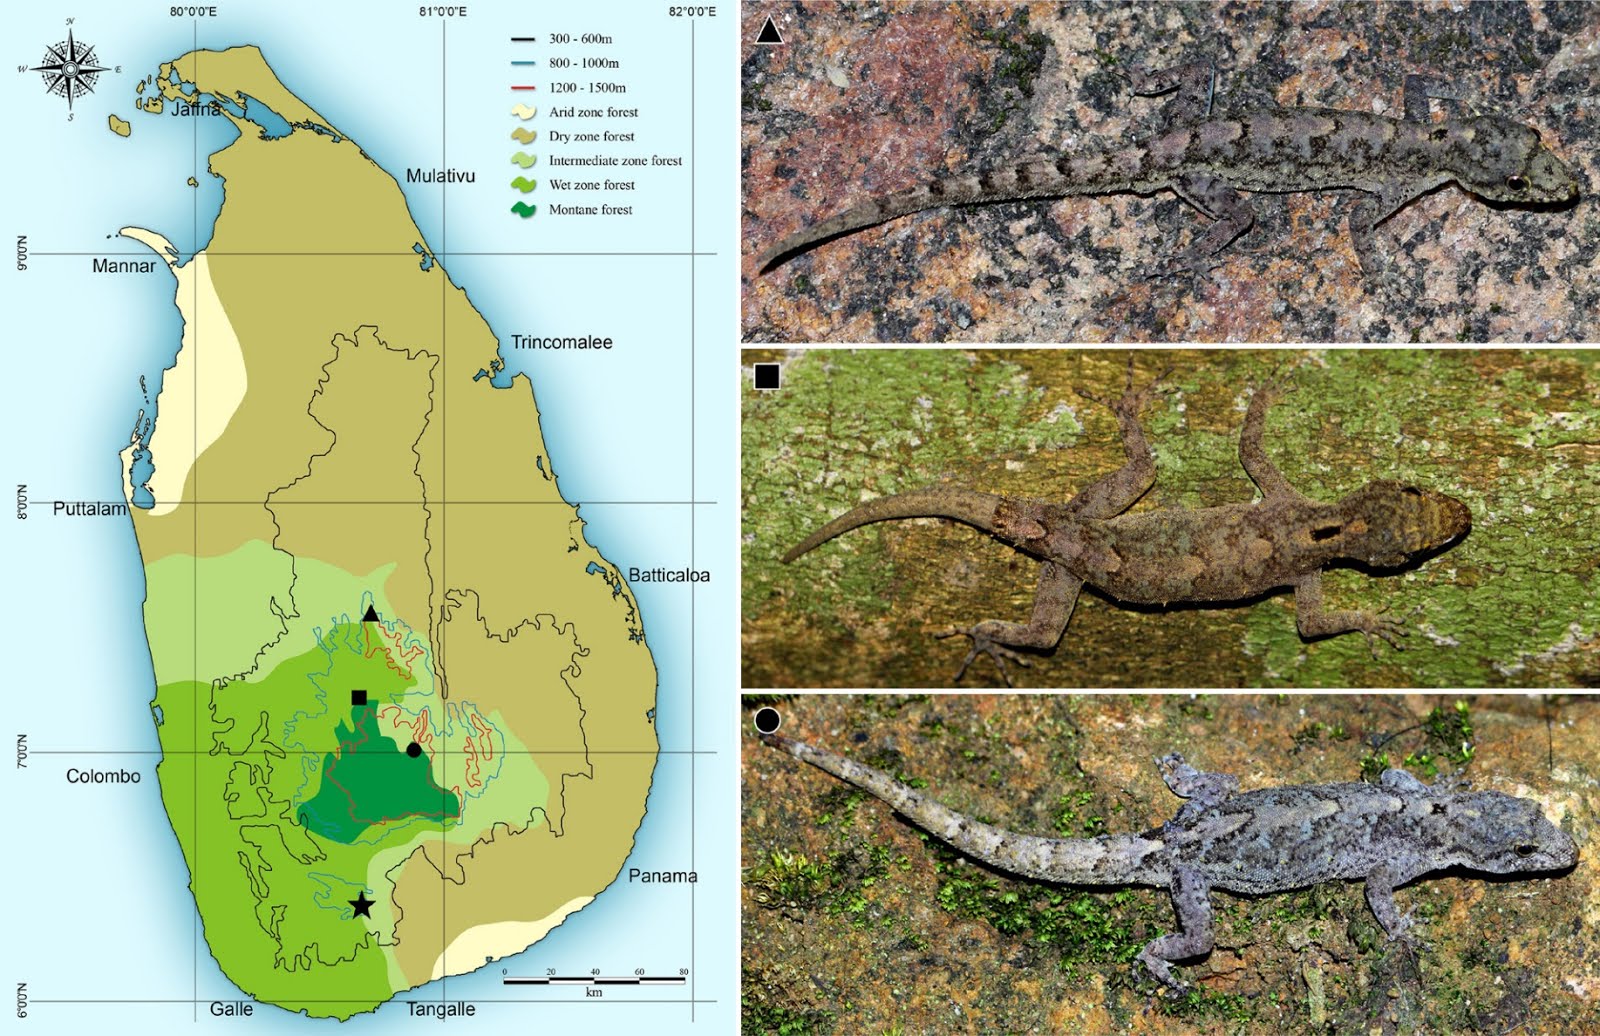 Currently known distribution of Cnemaspis godagedarai sp. nov. (Ensalwatte, star), and related species: C. gemunu (Haggala, circle), C. phillipsi (Gammaduwa, triangle), and C. scalpensis (Gannoruwa, square) in Sri Lanka. 